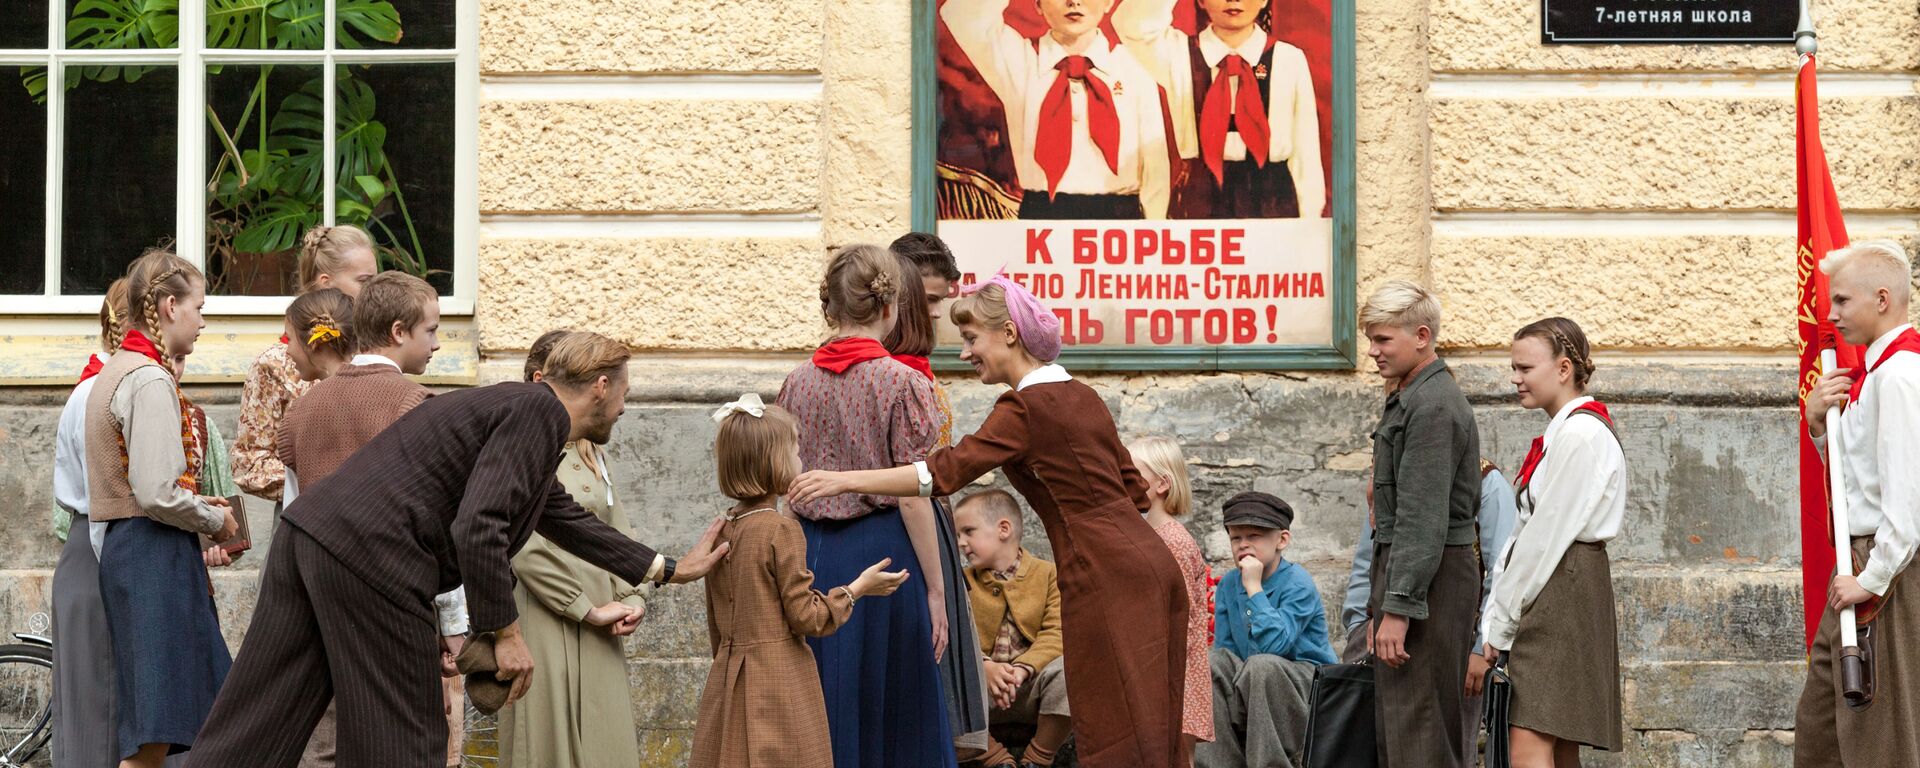 Кадр из фильма Товарищ ребенок - Sputnik Latvija, 1920, 19.05.2019